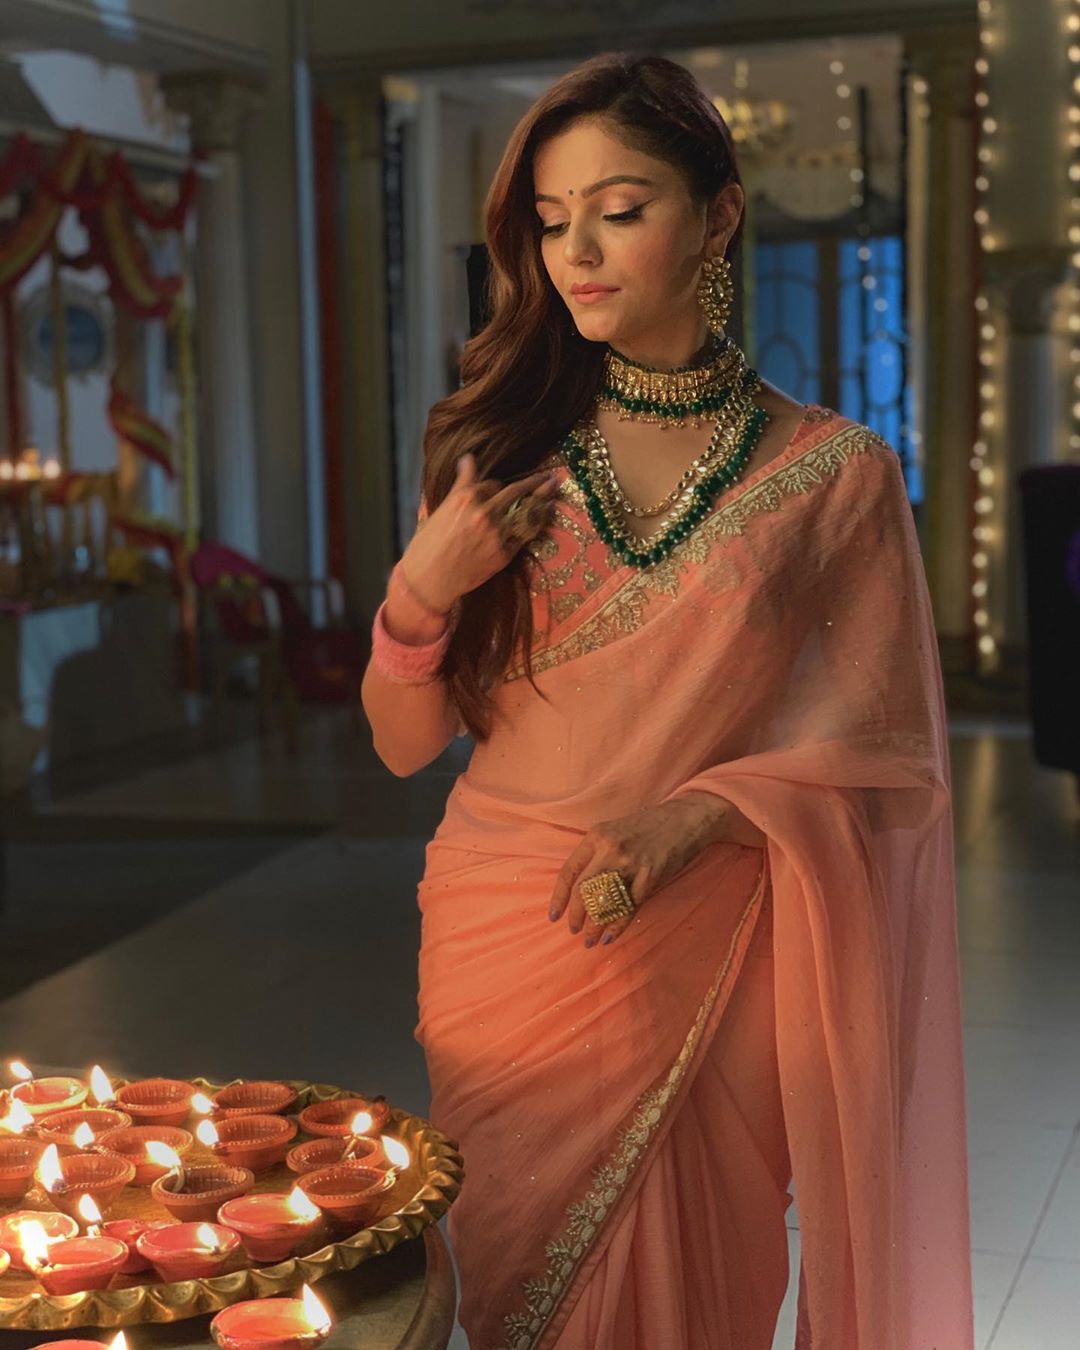 Shakti - Astitva Ke Ehsaas Ki actress Rubina Dilaik looks incredible in  pink sari avatar - The Indian Wire